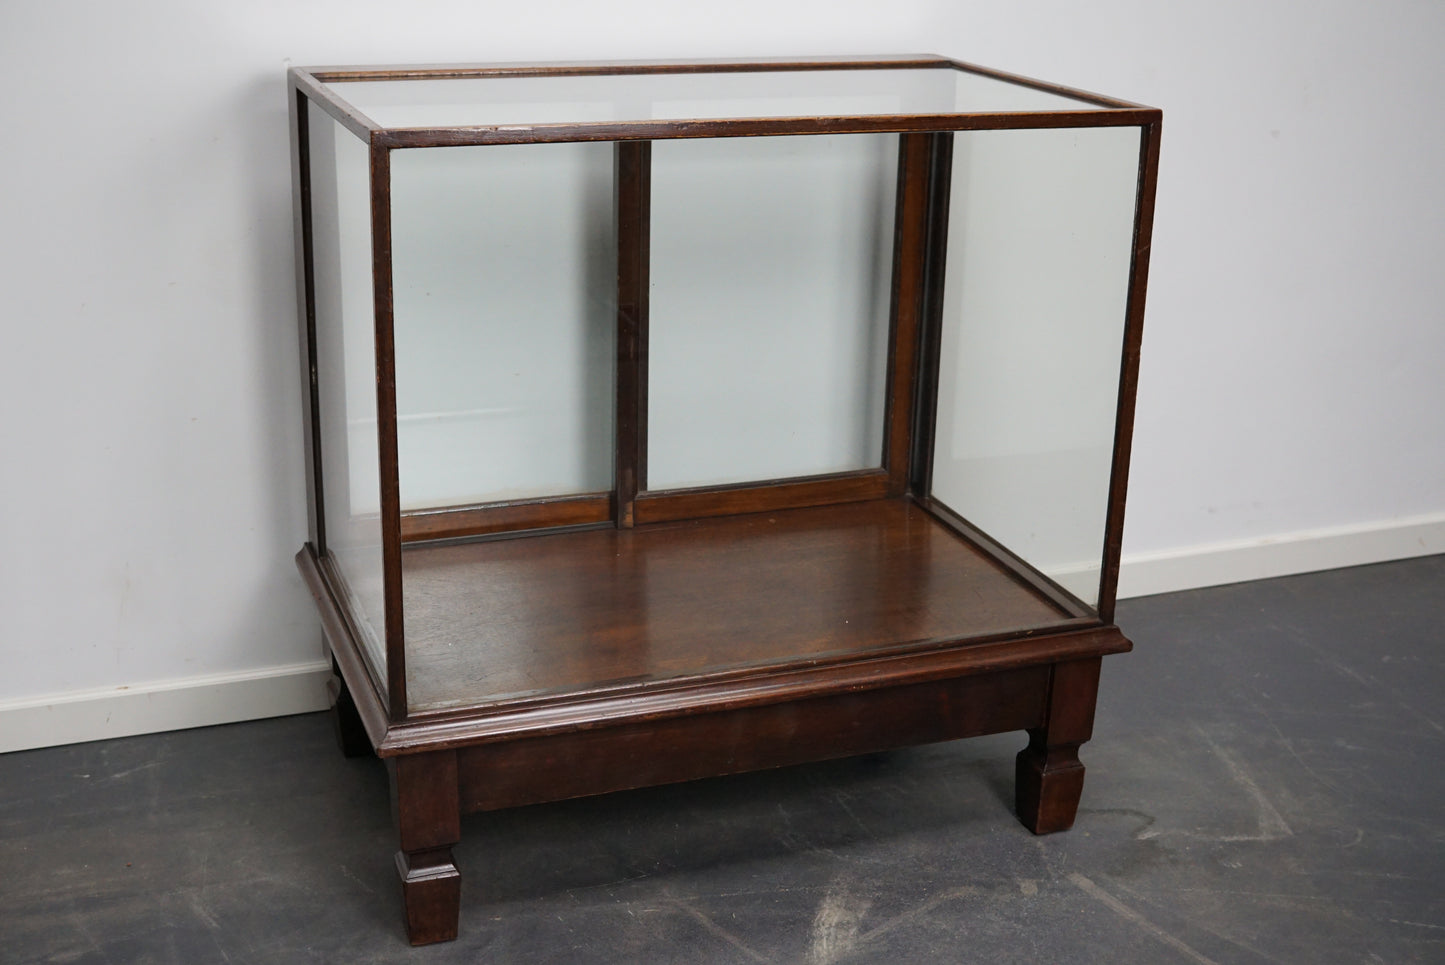 Mahogany Museum / Shop Display Cabinet or Vitrine, Early 20th Century